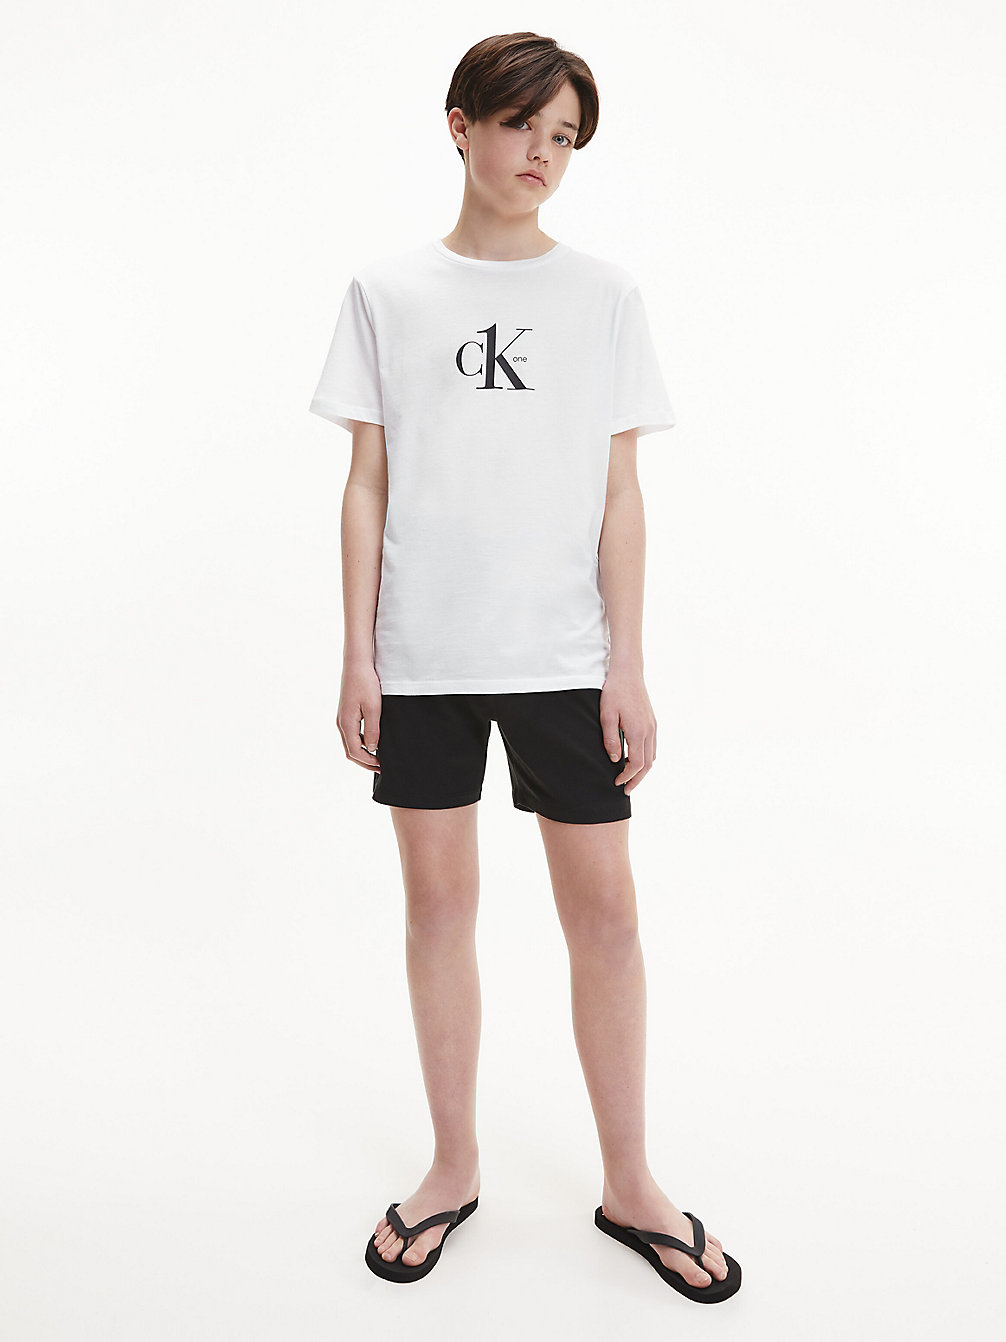 PVH CLASSIC WHITE Boys Beach T-Shirt - CK One undefined boys Calvin Klein